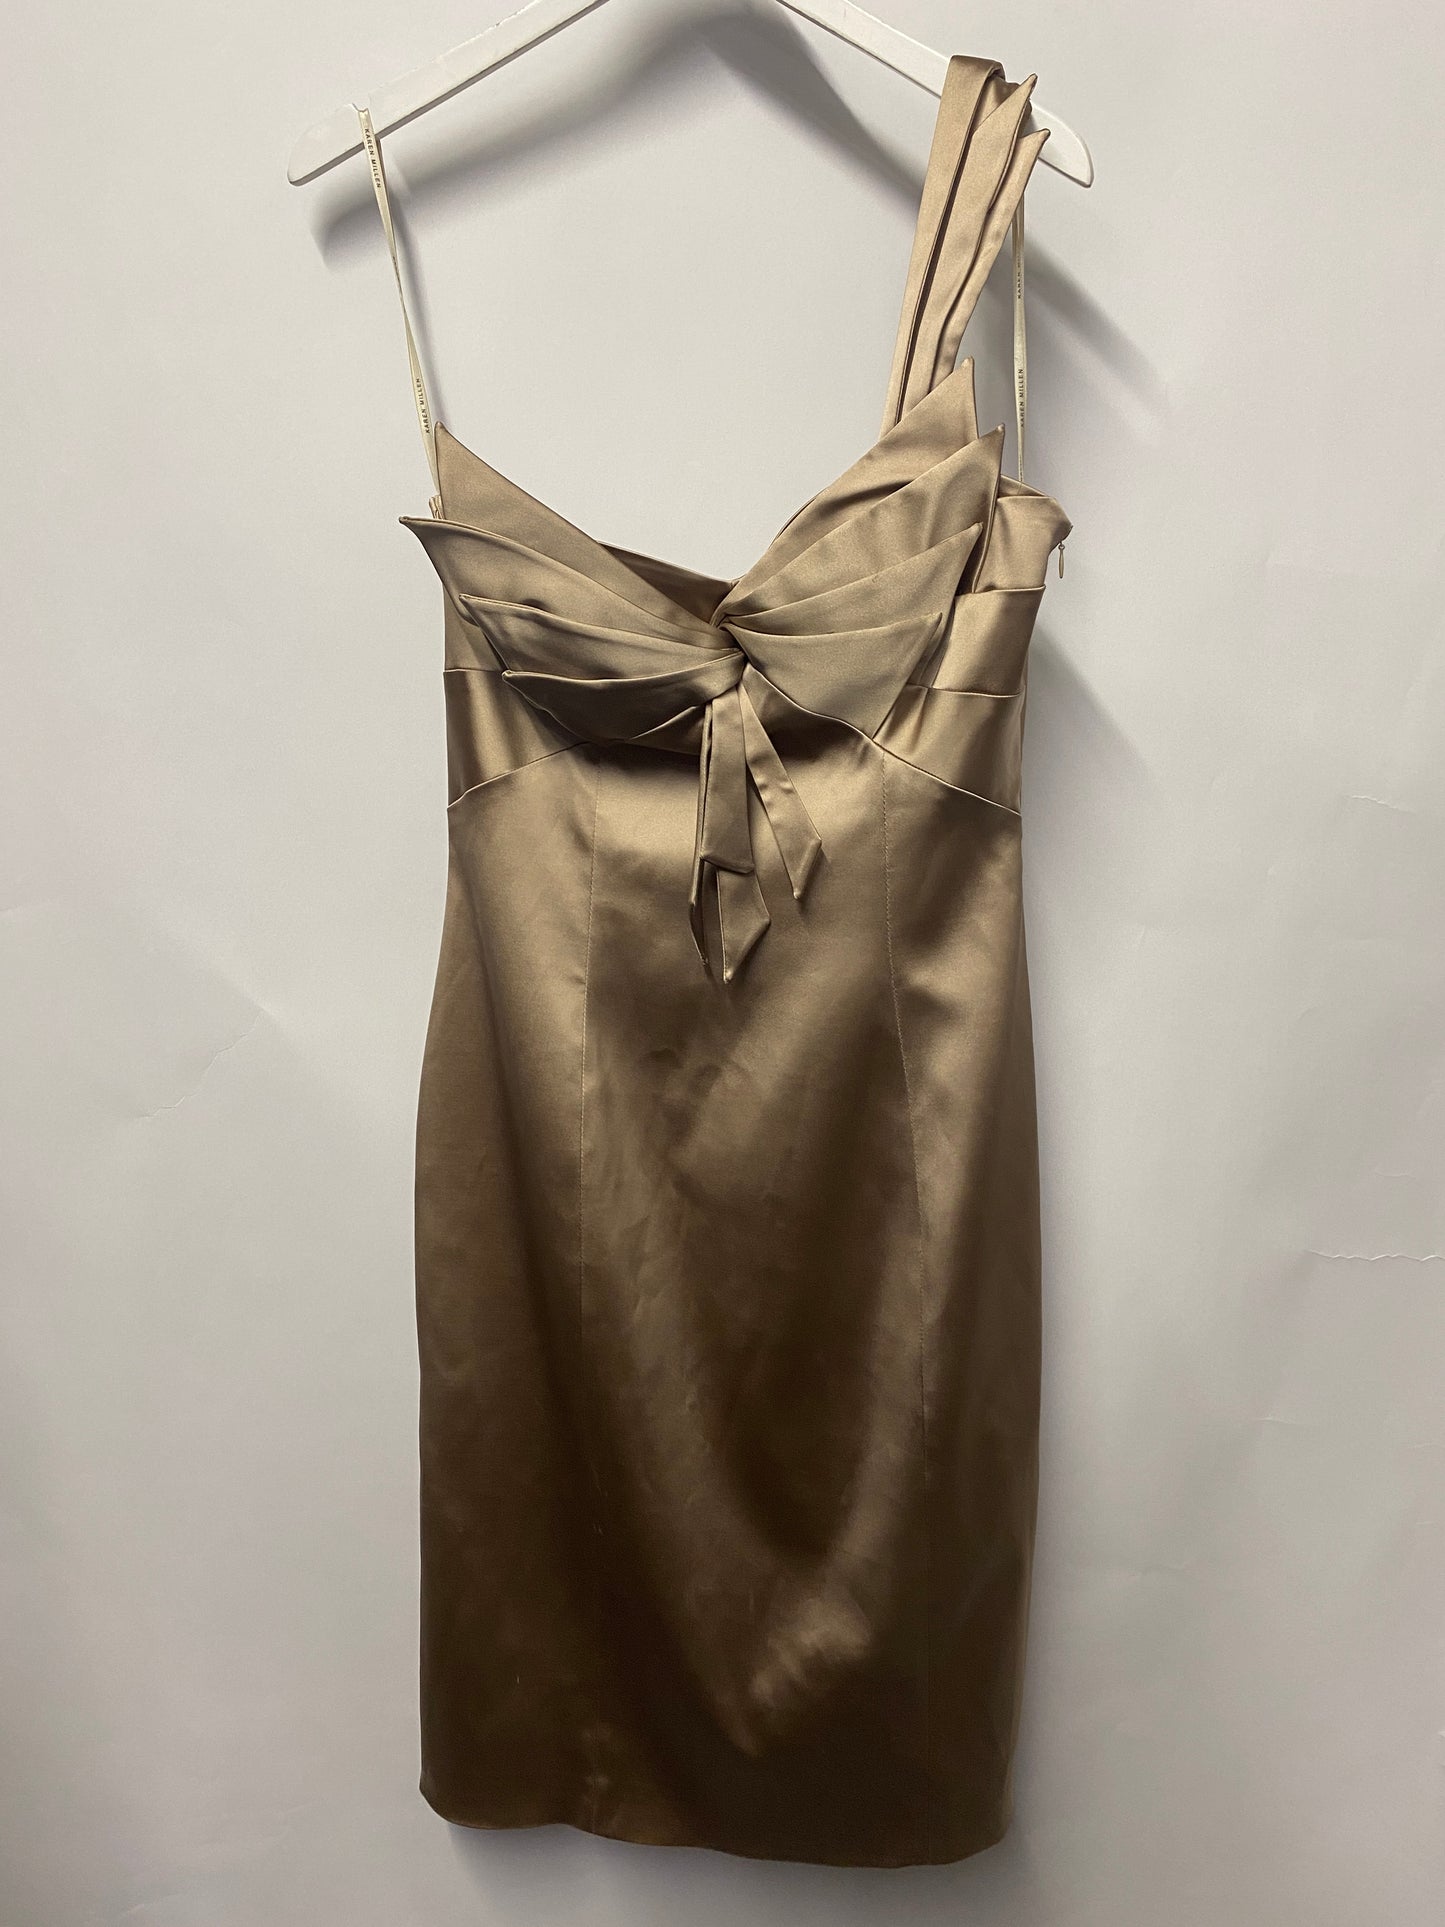 Karen Millen Gold Satin Fitted One Shoulder Occasion Dress 14 BNWT